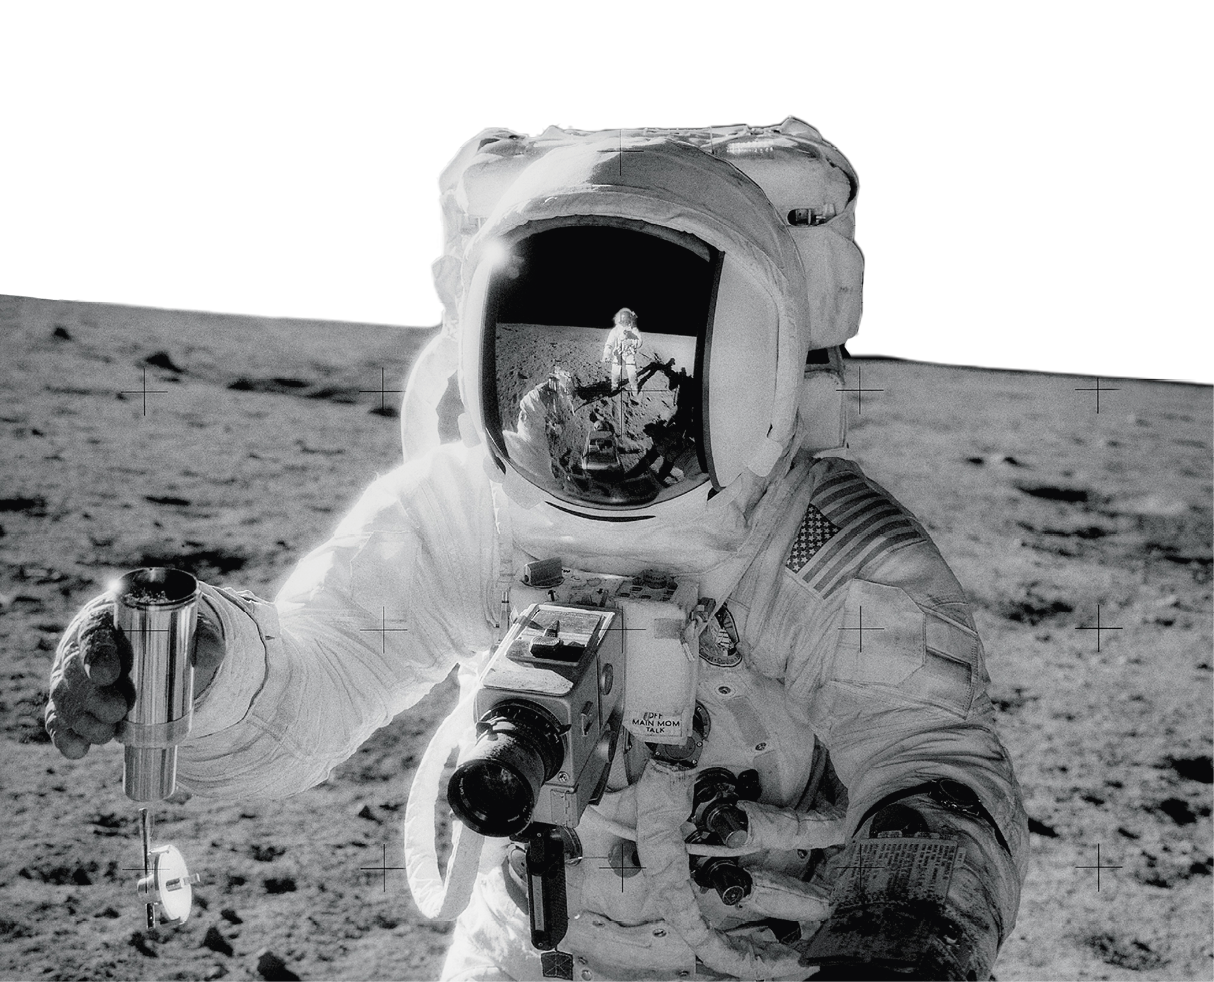 Photo of astronaut Al Bean on the moon